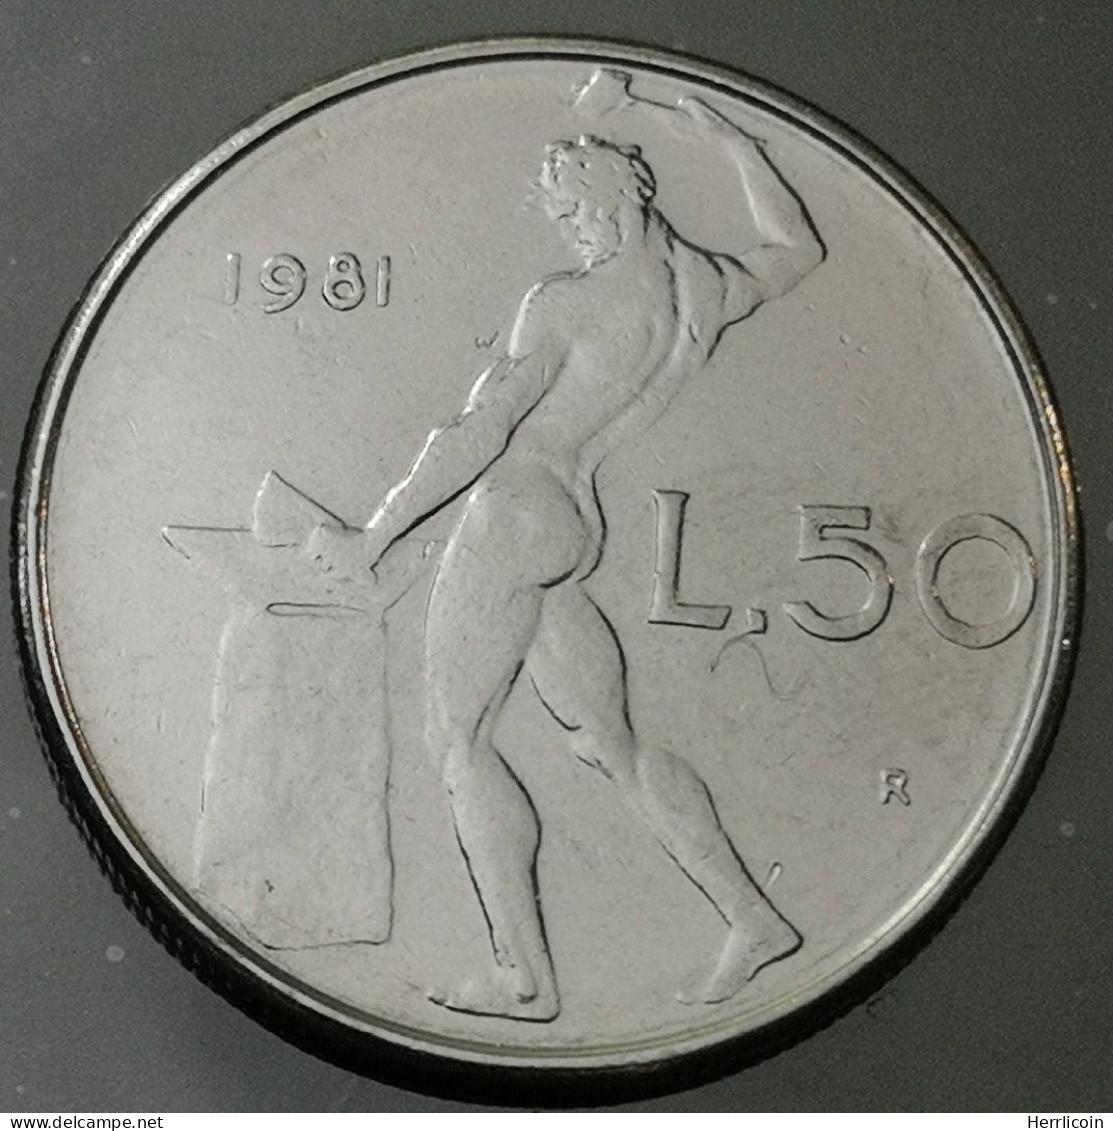 Monnaie Italie - 1981 R - 50 Lire Grand Module - 50 Lire